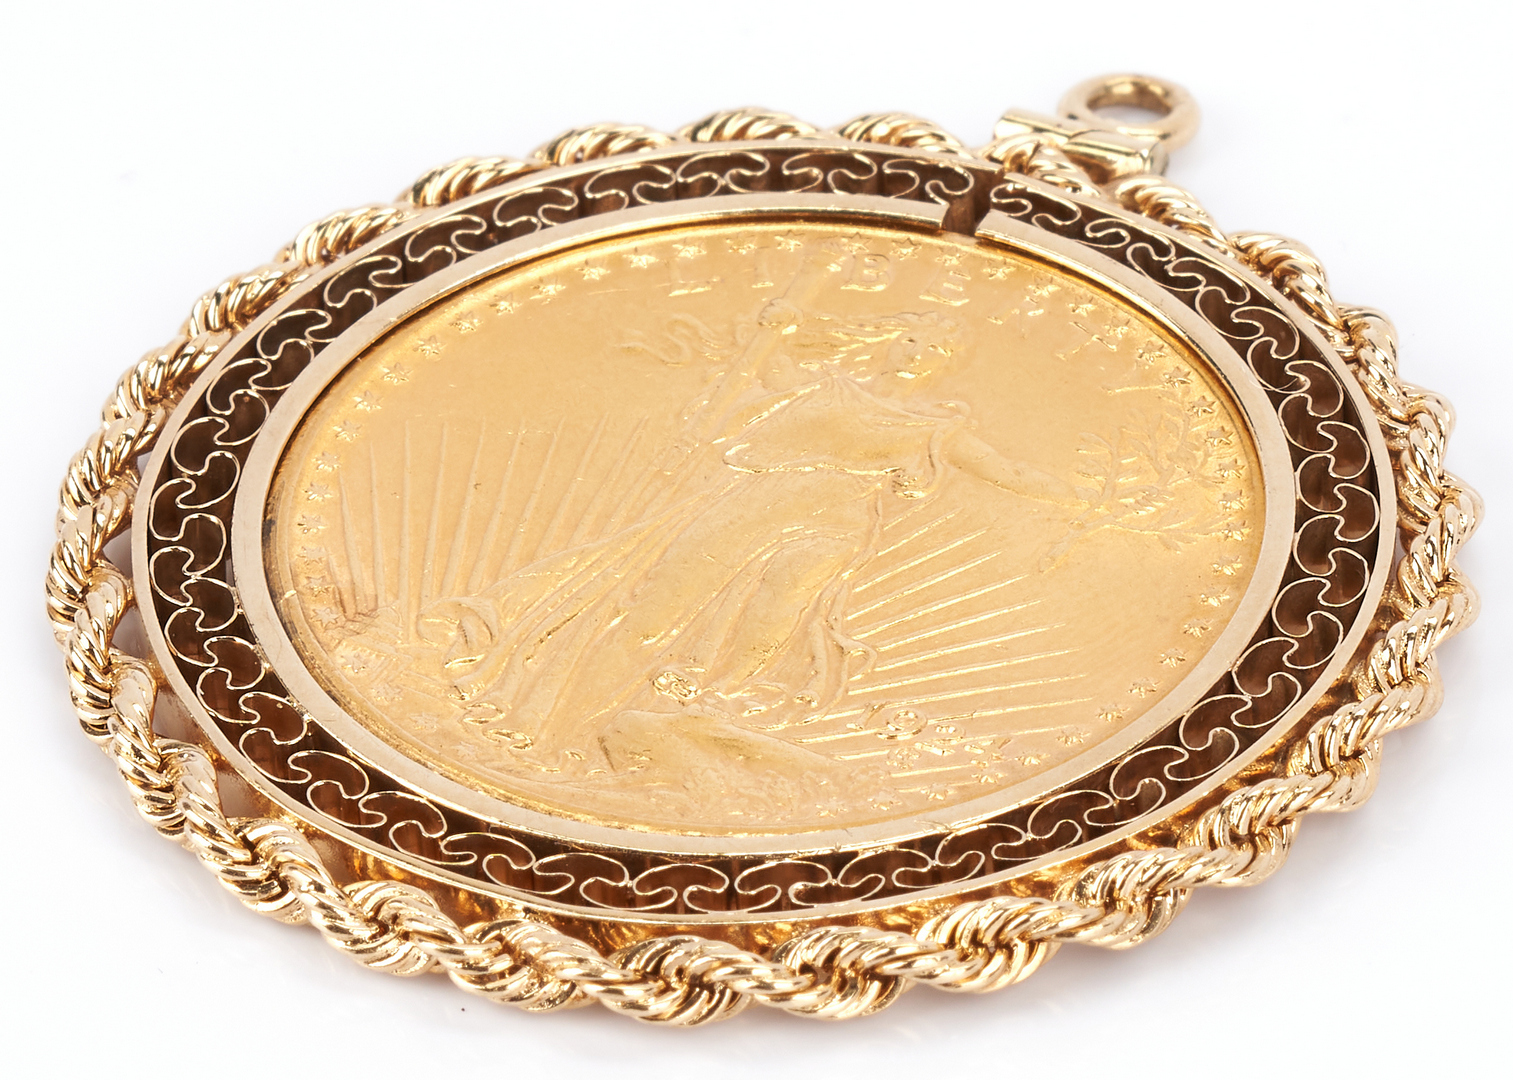 Lot 755: 1924 20 Dollar Saint Gaudens Gold Piece in 14K Bezel